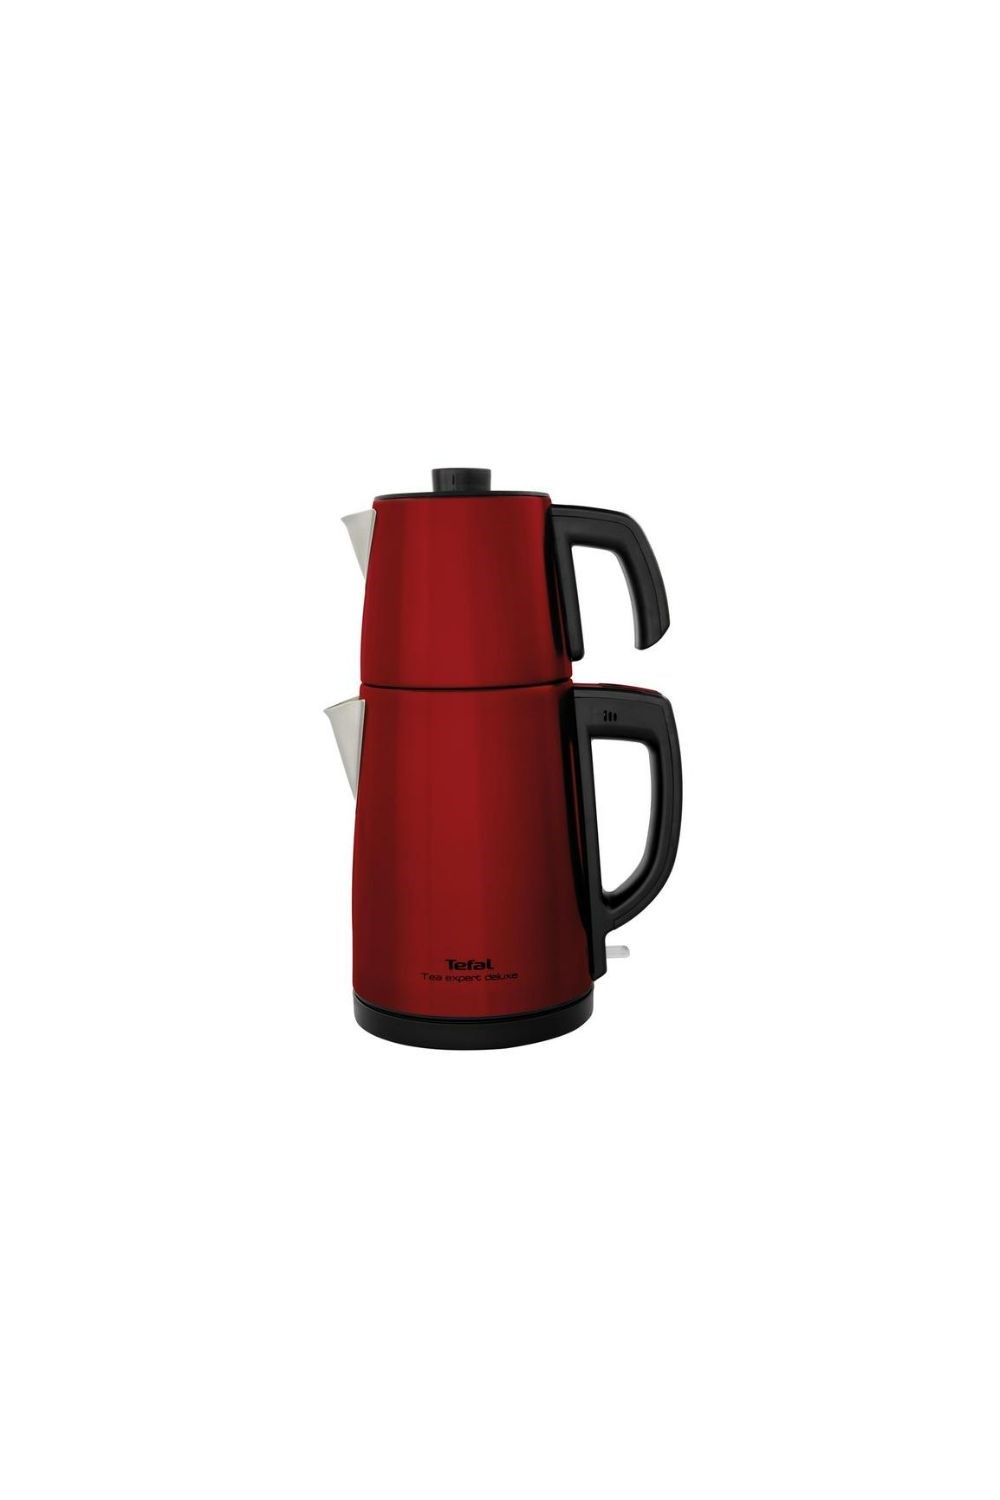 Tefal Tea Expert Deluxe Kırmızı Çay Makinesi (Teşhir & Outlet)